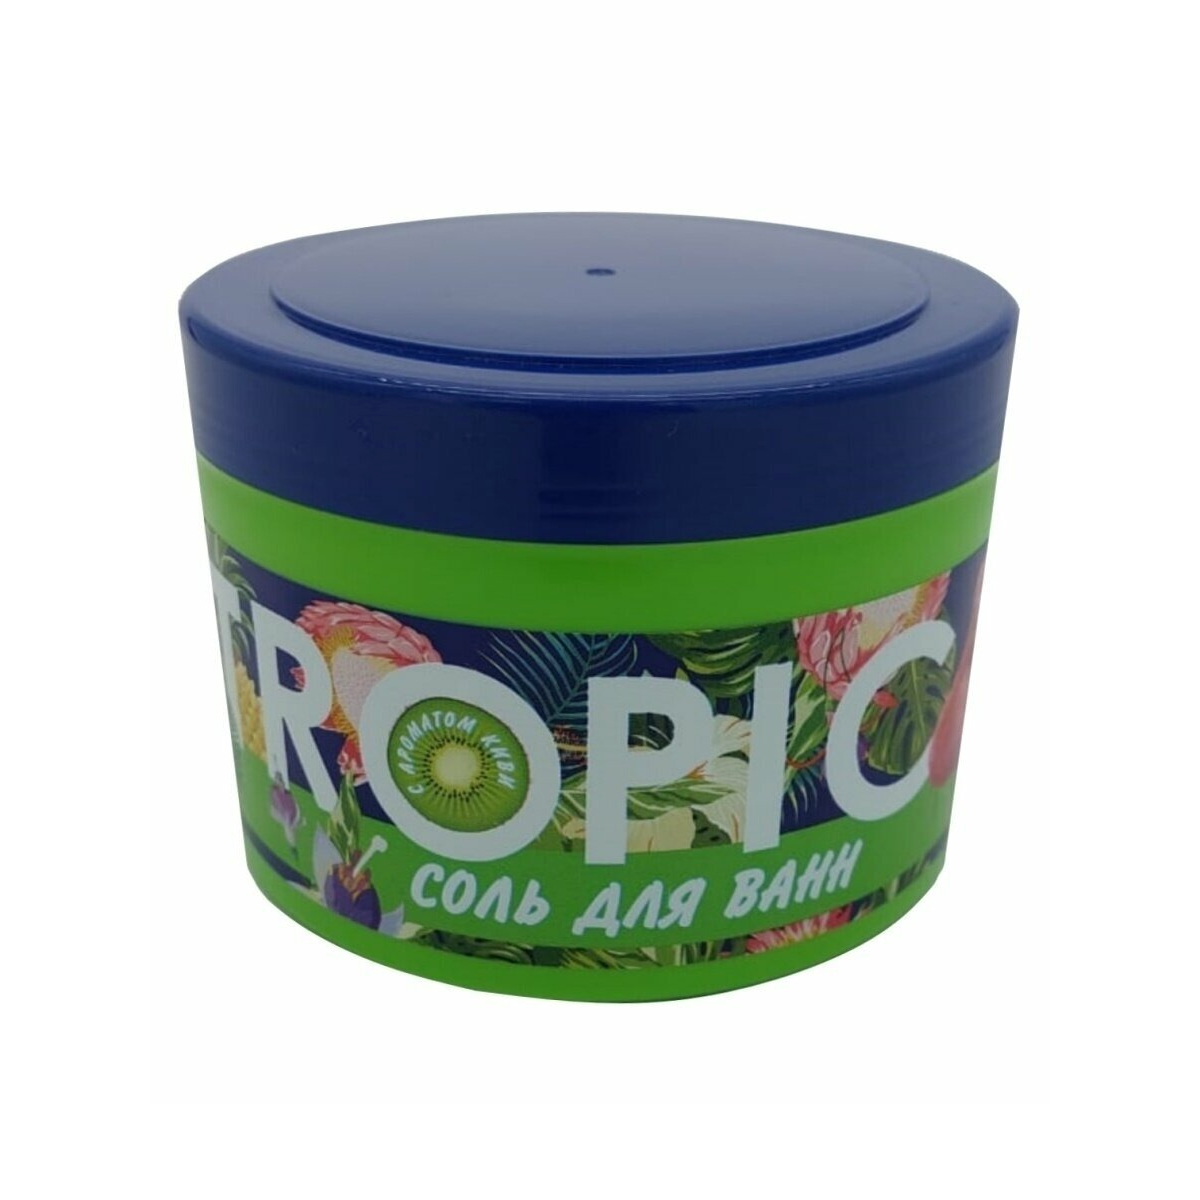 Соль для ванн Особая Серия Tropic kiwi 700 г пена для ванн n siberica кедровое спа 600 12 nsiberica 0785